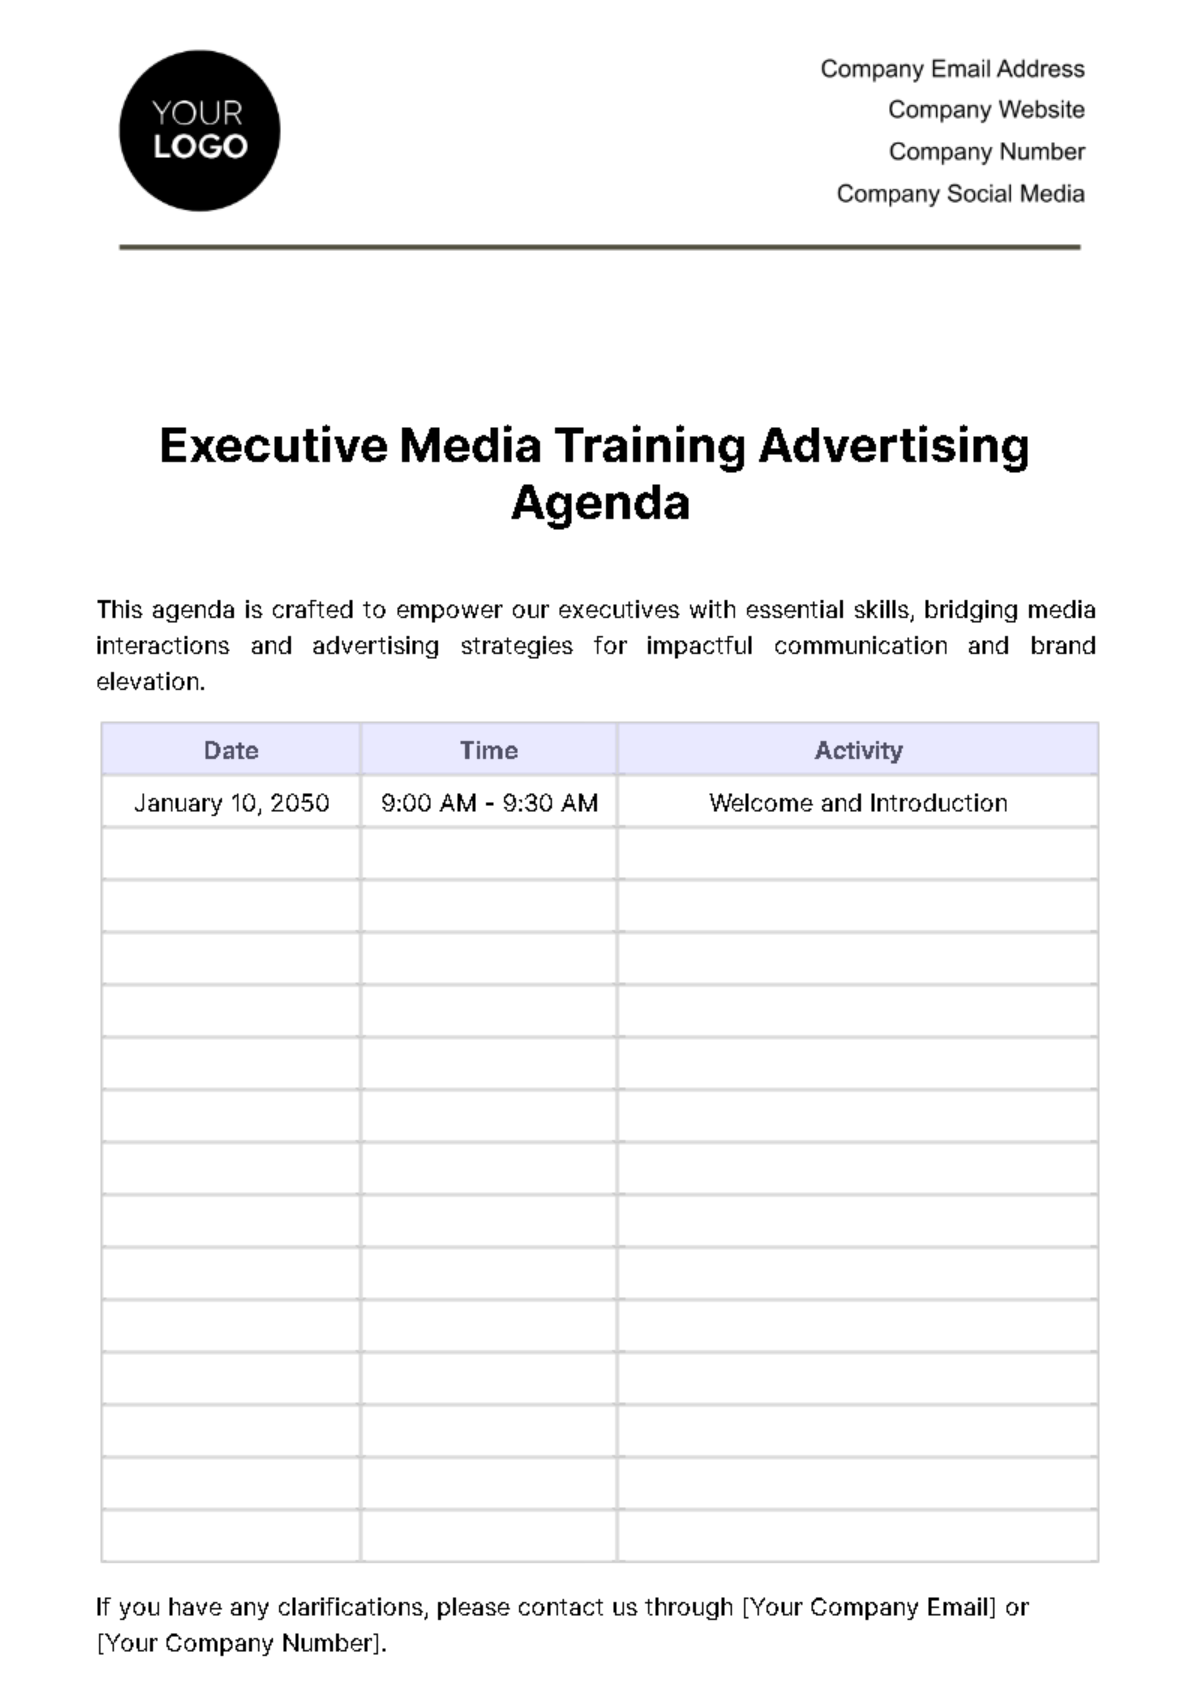 Free Executive Media Training Advertising Agenda Template 